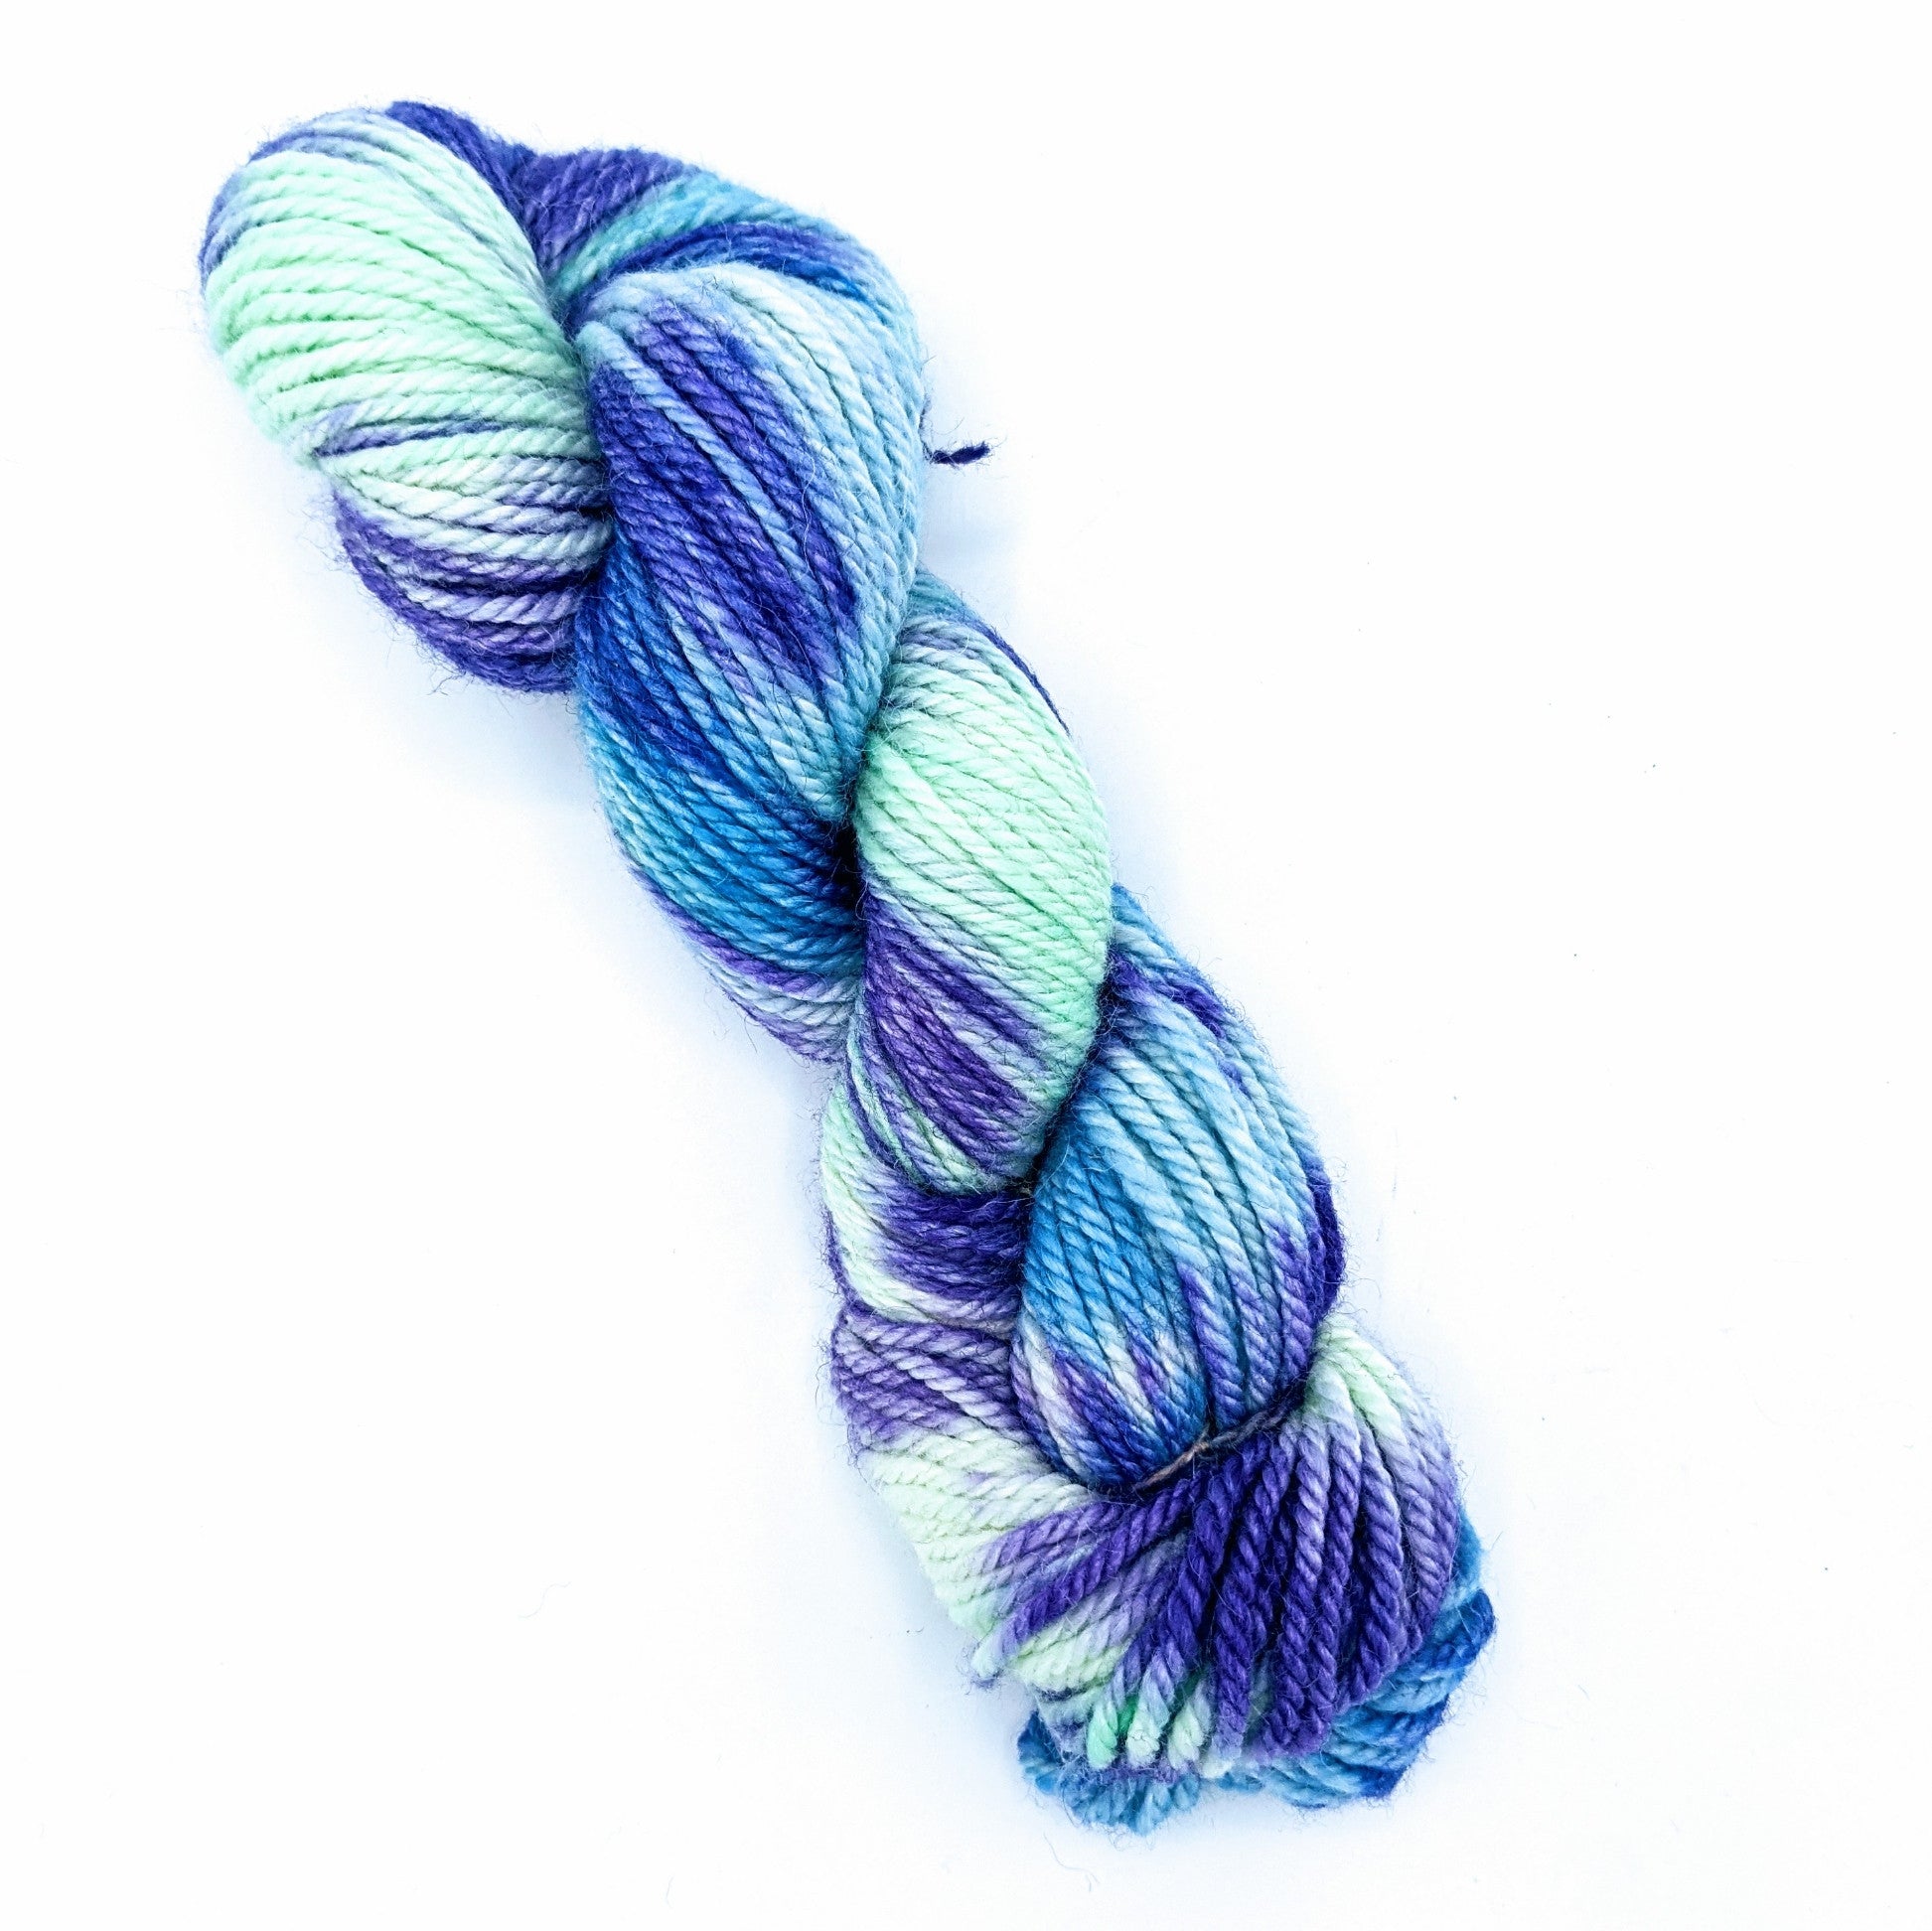 Bulky Knitter's Yarn - Dyed